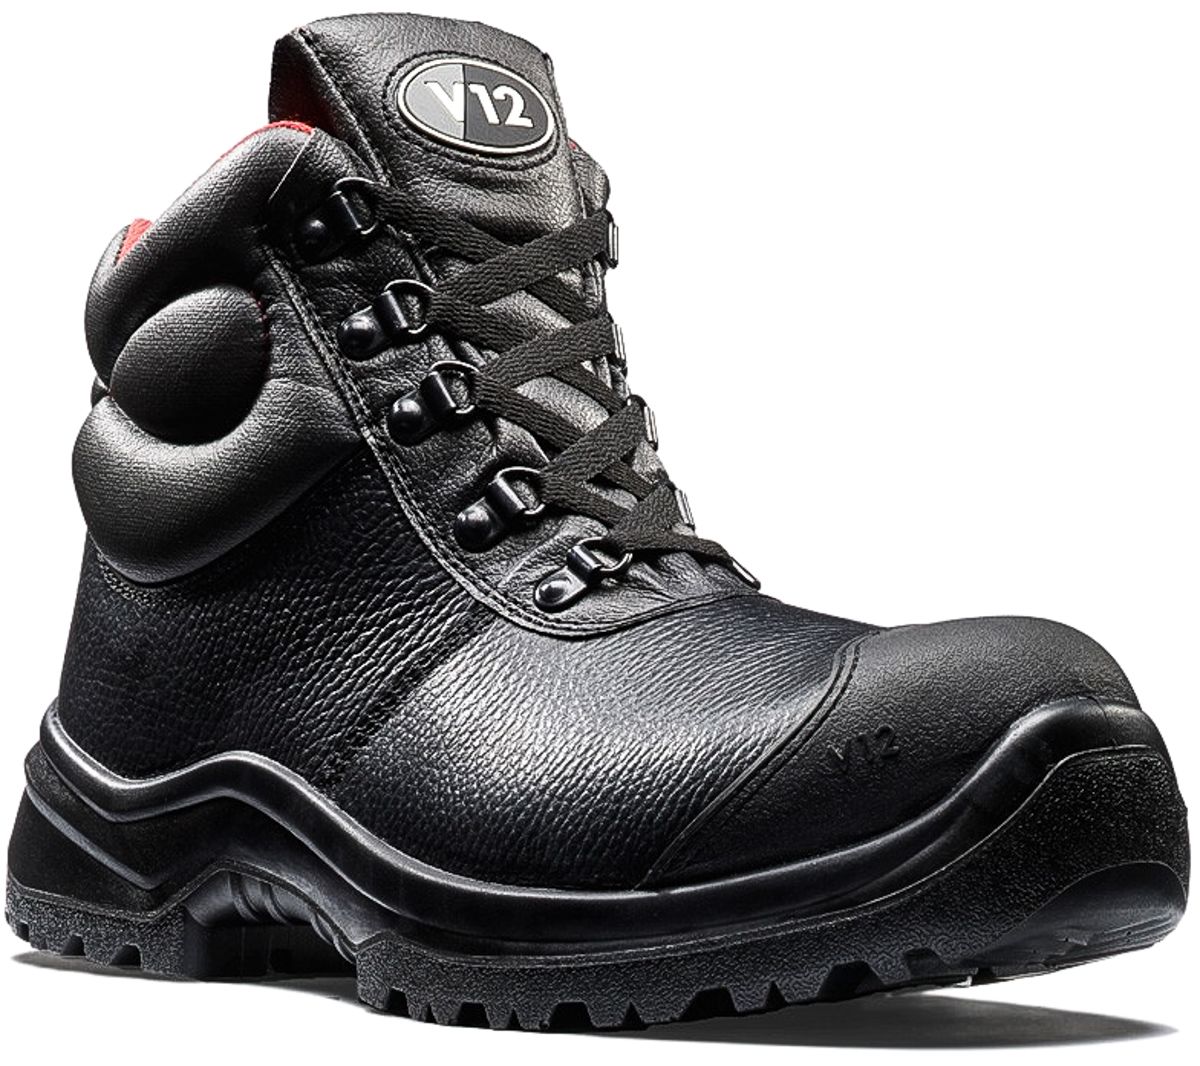 V12 Footwear Rhino Black Composite Toe Capped Safety Boots, UK 9, EU 43